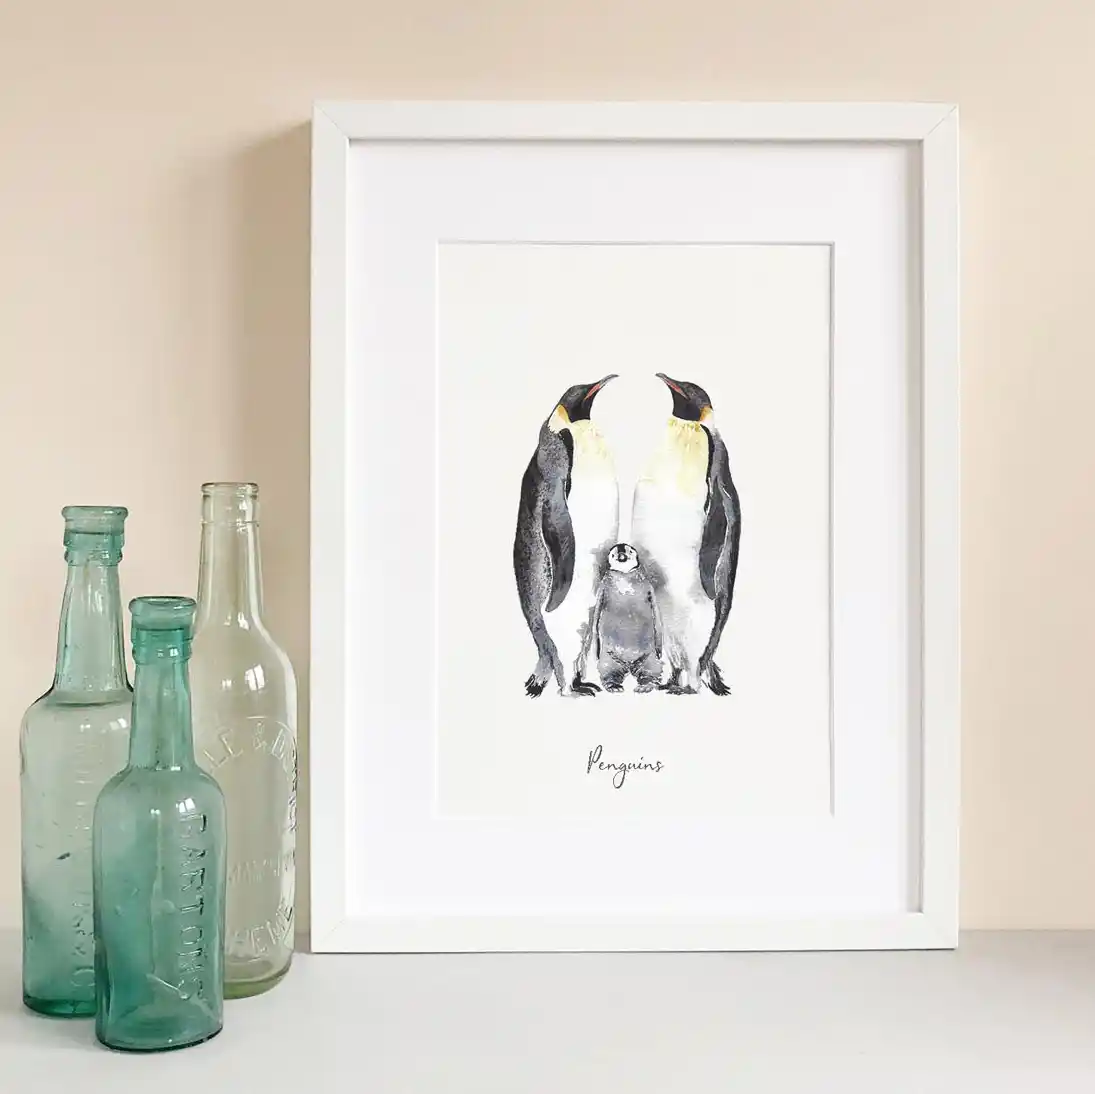 penguins-emperor-handpainted-art-family